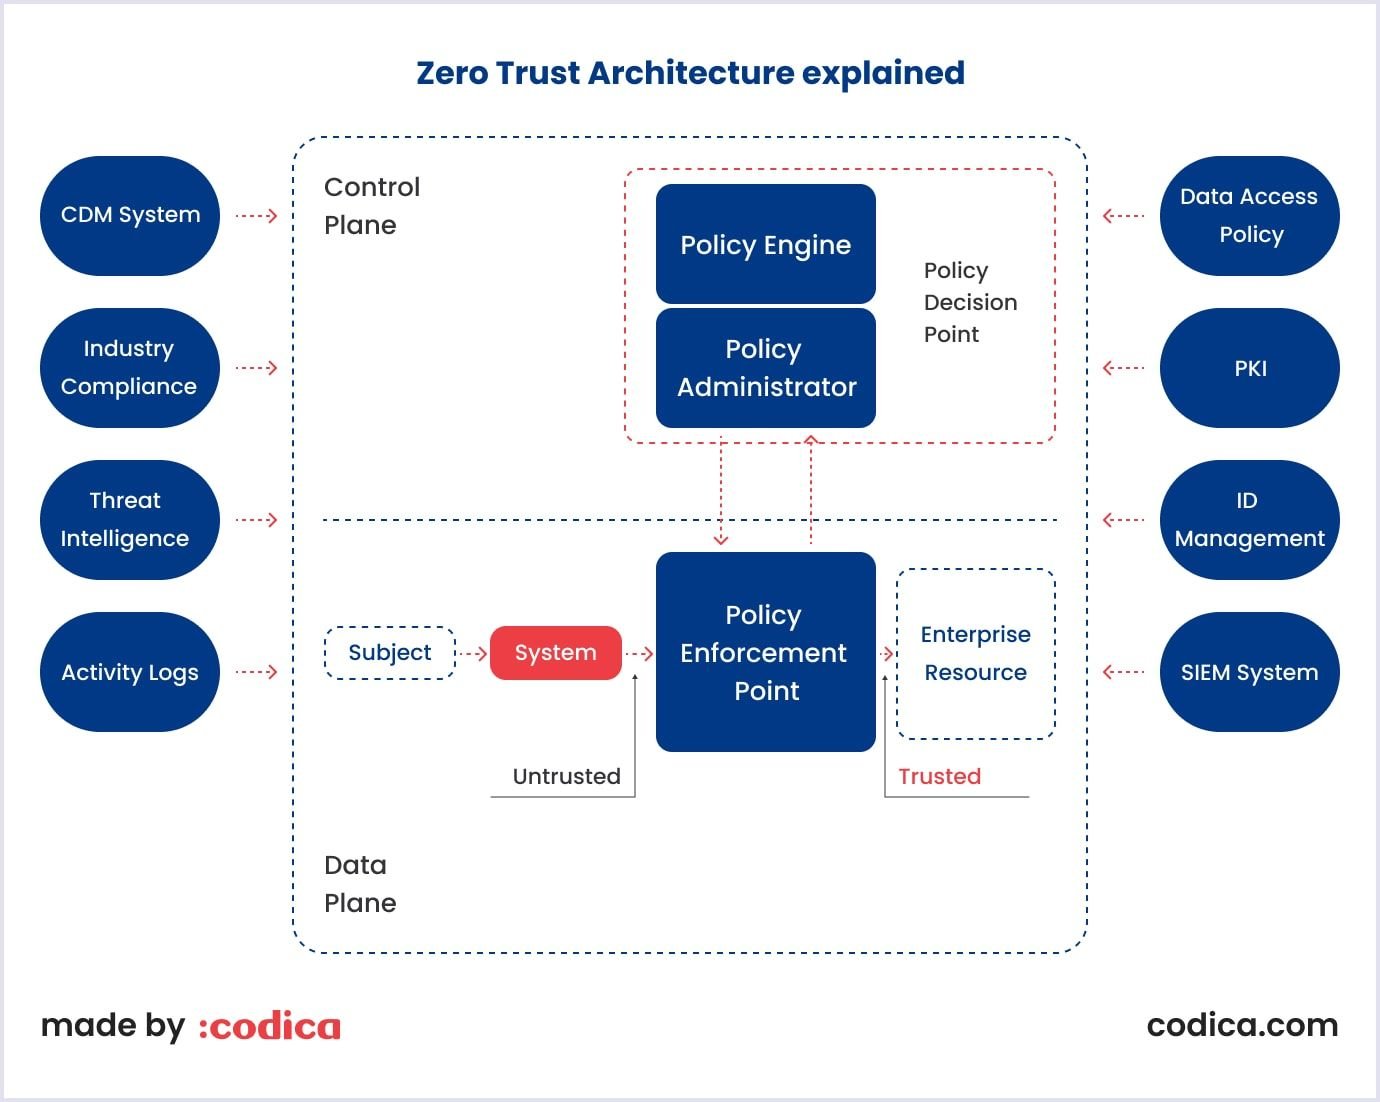 Core Zero Trust logical components